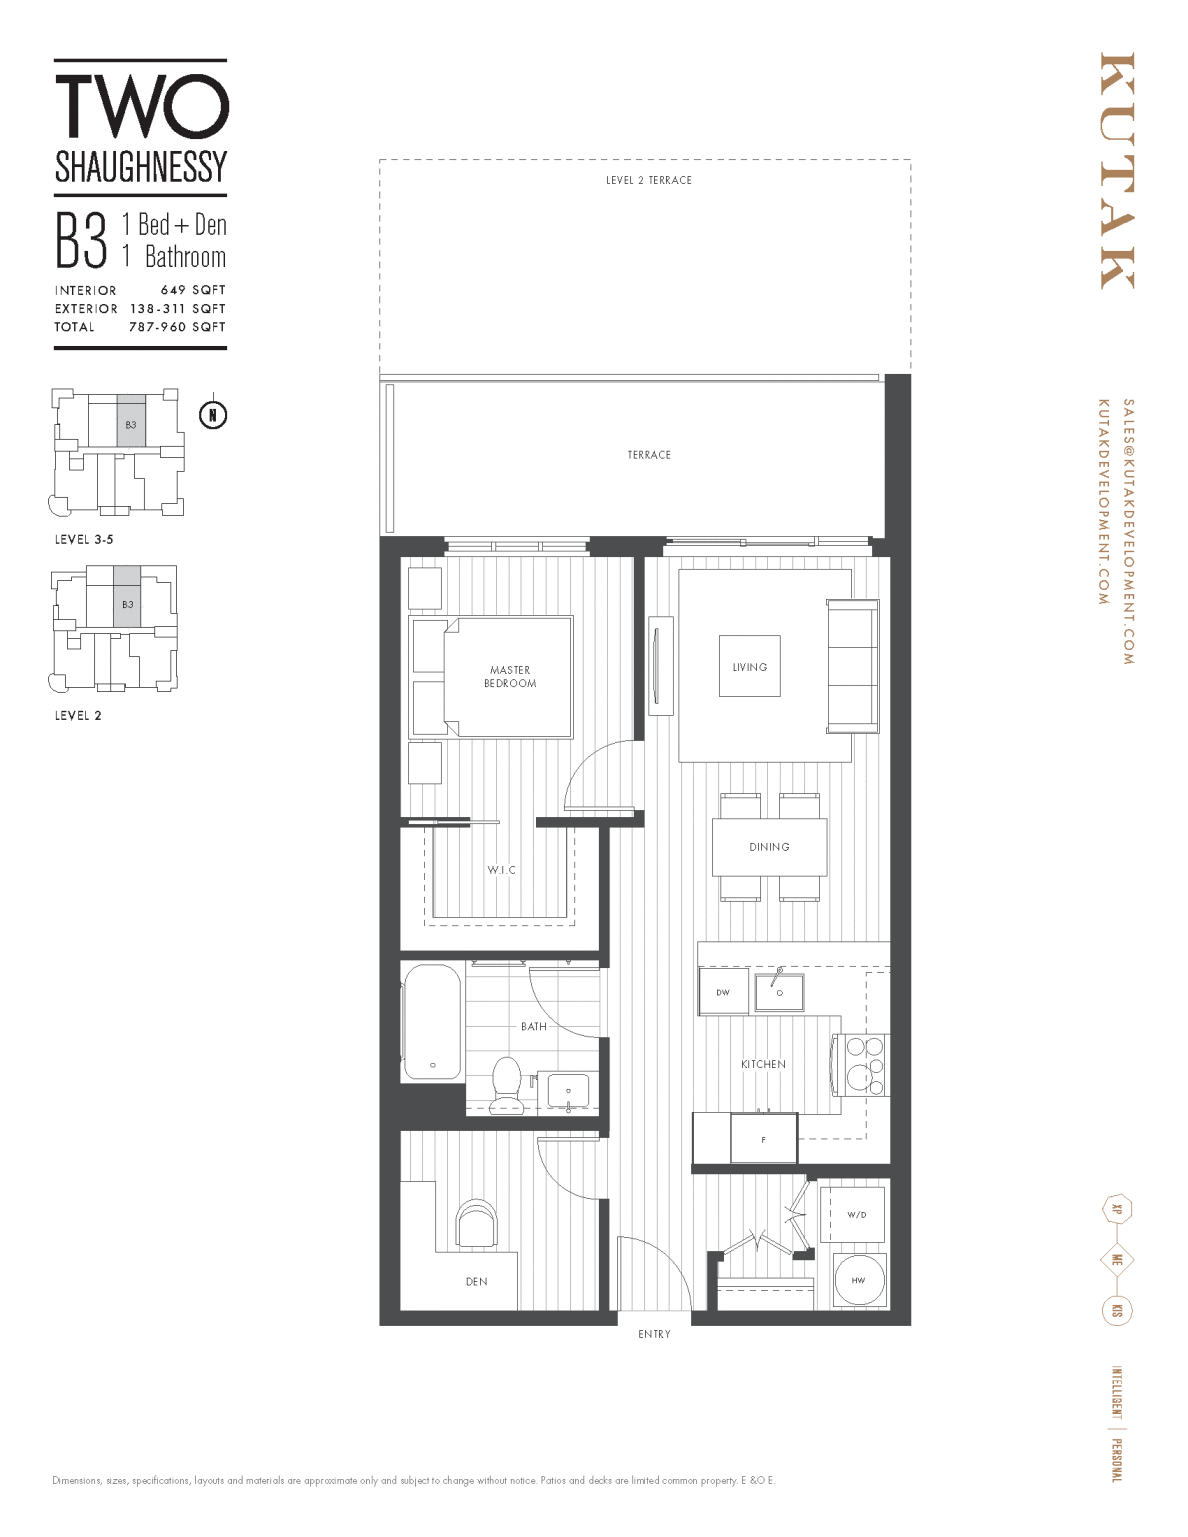 Two Shaughnessy Floor Plan B3